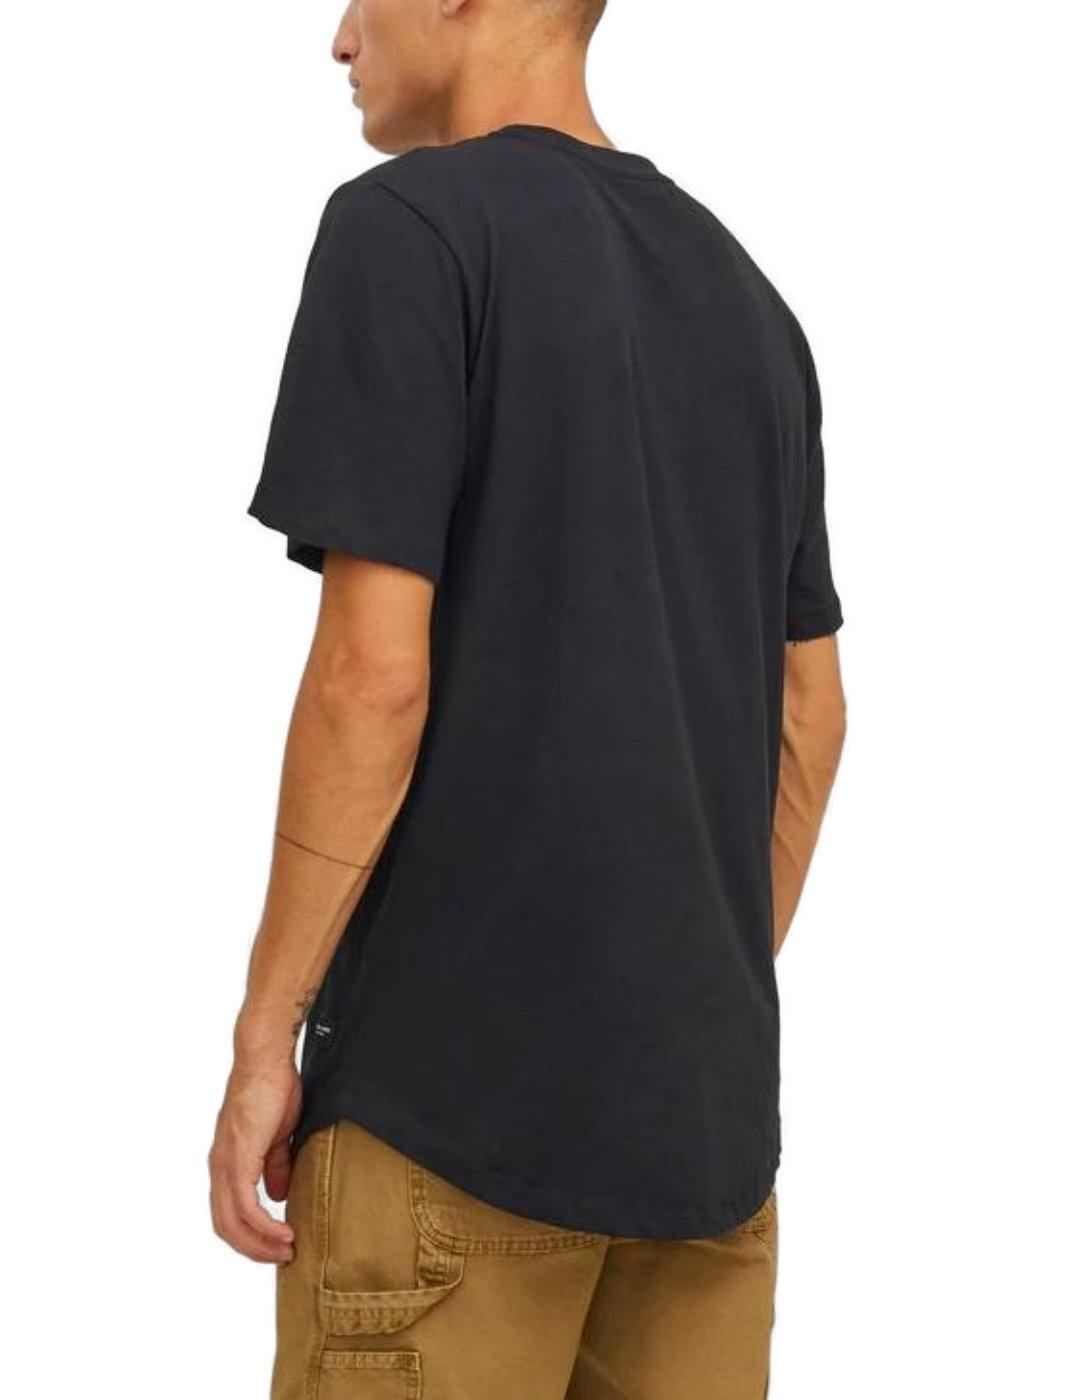 Camiseta Jack/df01Jones Noa negra manga corta para hombre